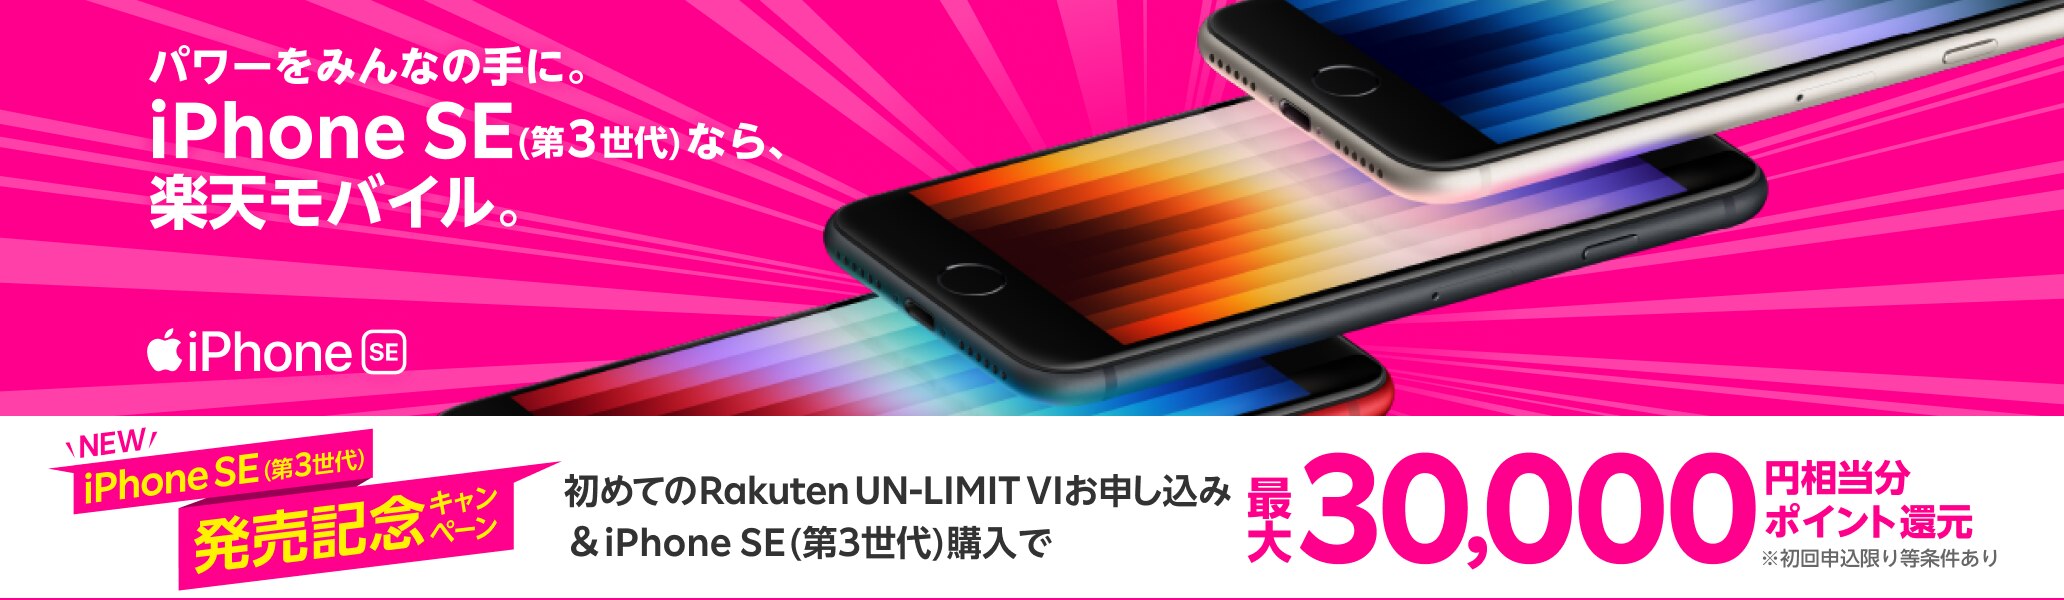 New iPhone SE(第3世代)発売記念キャンペーンRakuten UN-LIMIT VIに乗り換え(MNP)＆iPhone SE(第3世代)購入で最大30,000円相当分ポイント還元※初回申込限り等条件あり